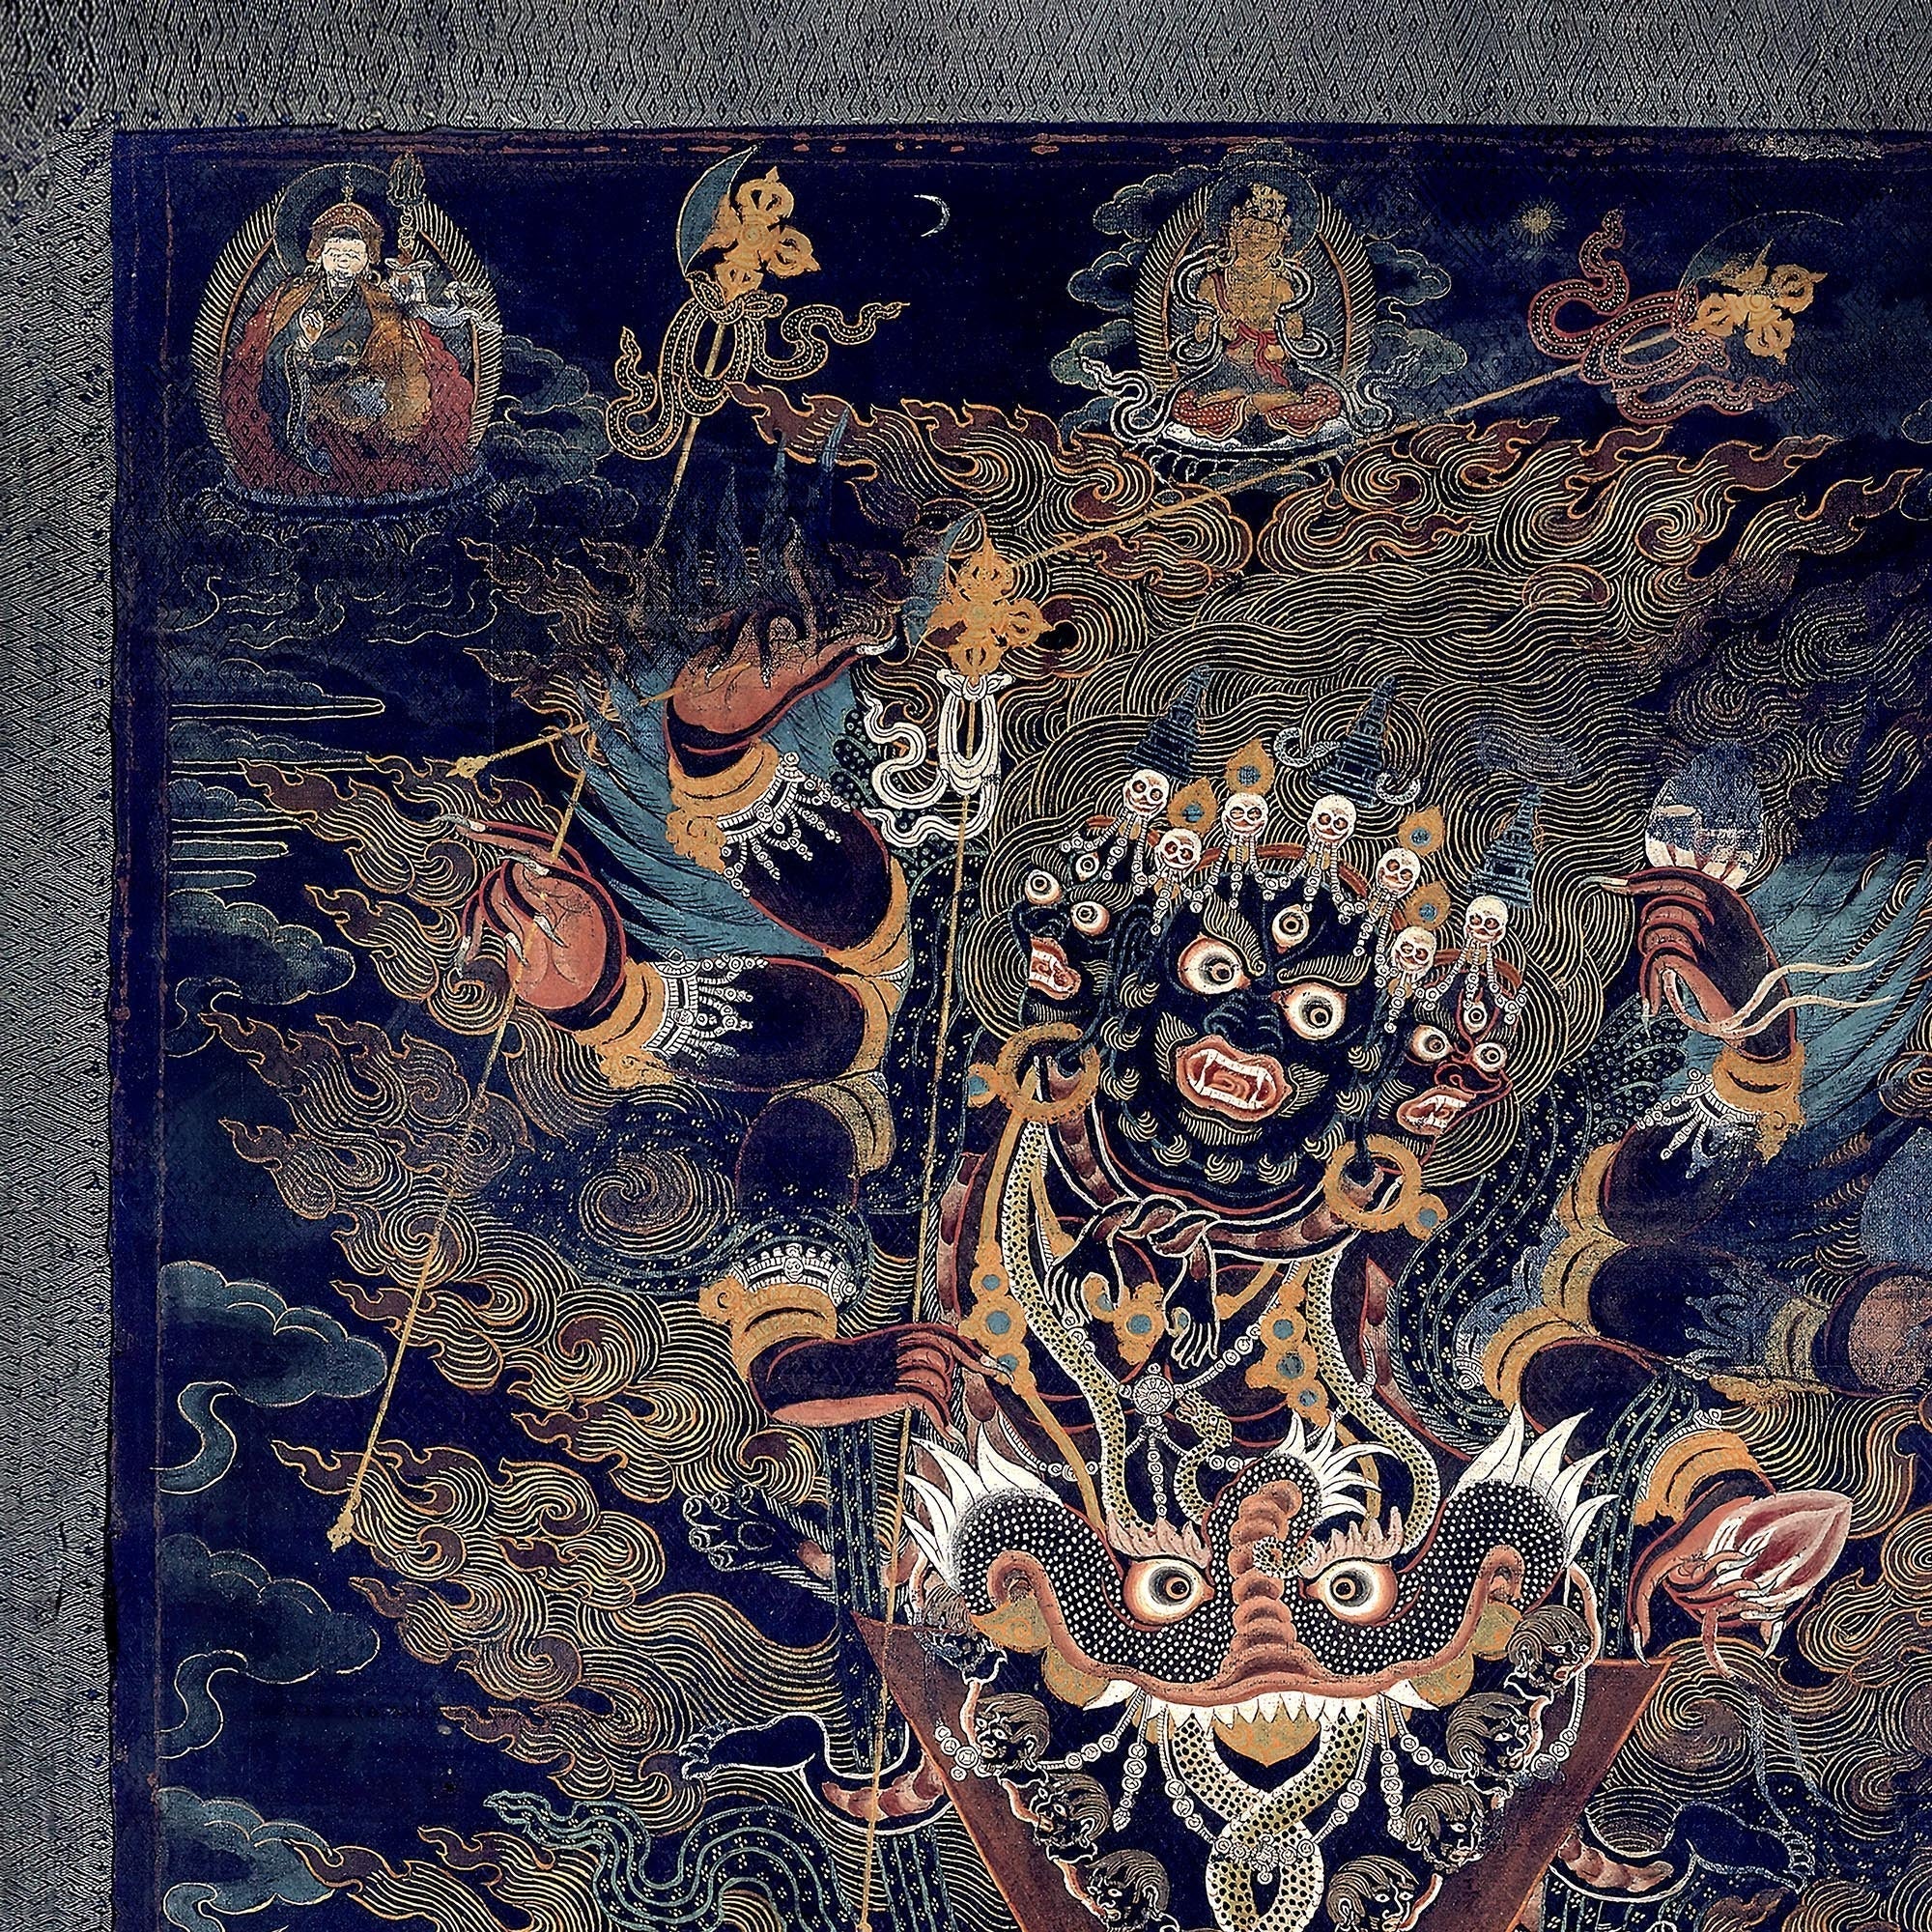 Fine art Framed Guru Dragpur or Vajrakila Wrathful Padmasambhava, Yantra Mandala, Tibetan Thangka Dharma Protector Vintage Buddhist Framed Art Print